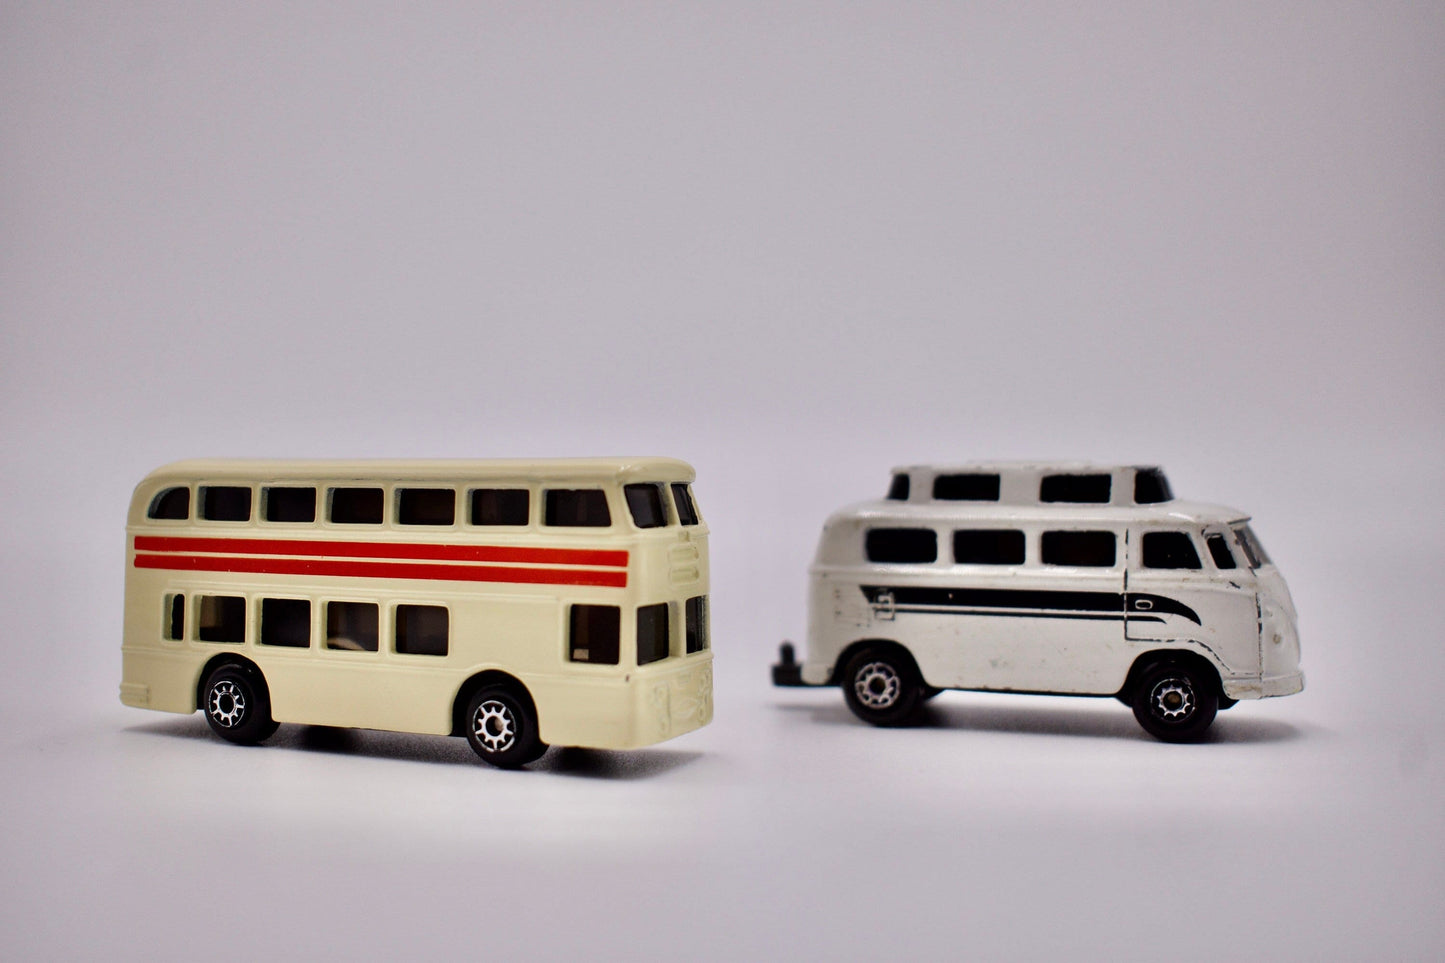 Volkswagen Camper - Daimler Double Decker Tour Bus - Diecast Vintage - Diecast Collectibles - Mini Model Toy Car - Maisto Car - Maisto